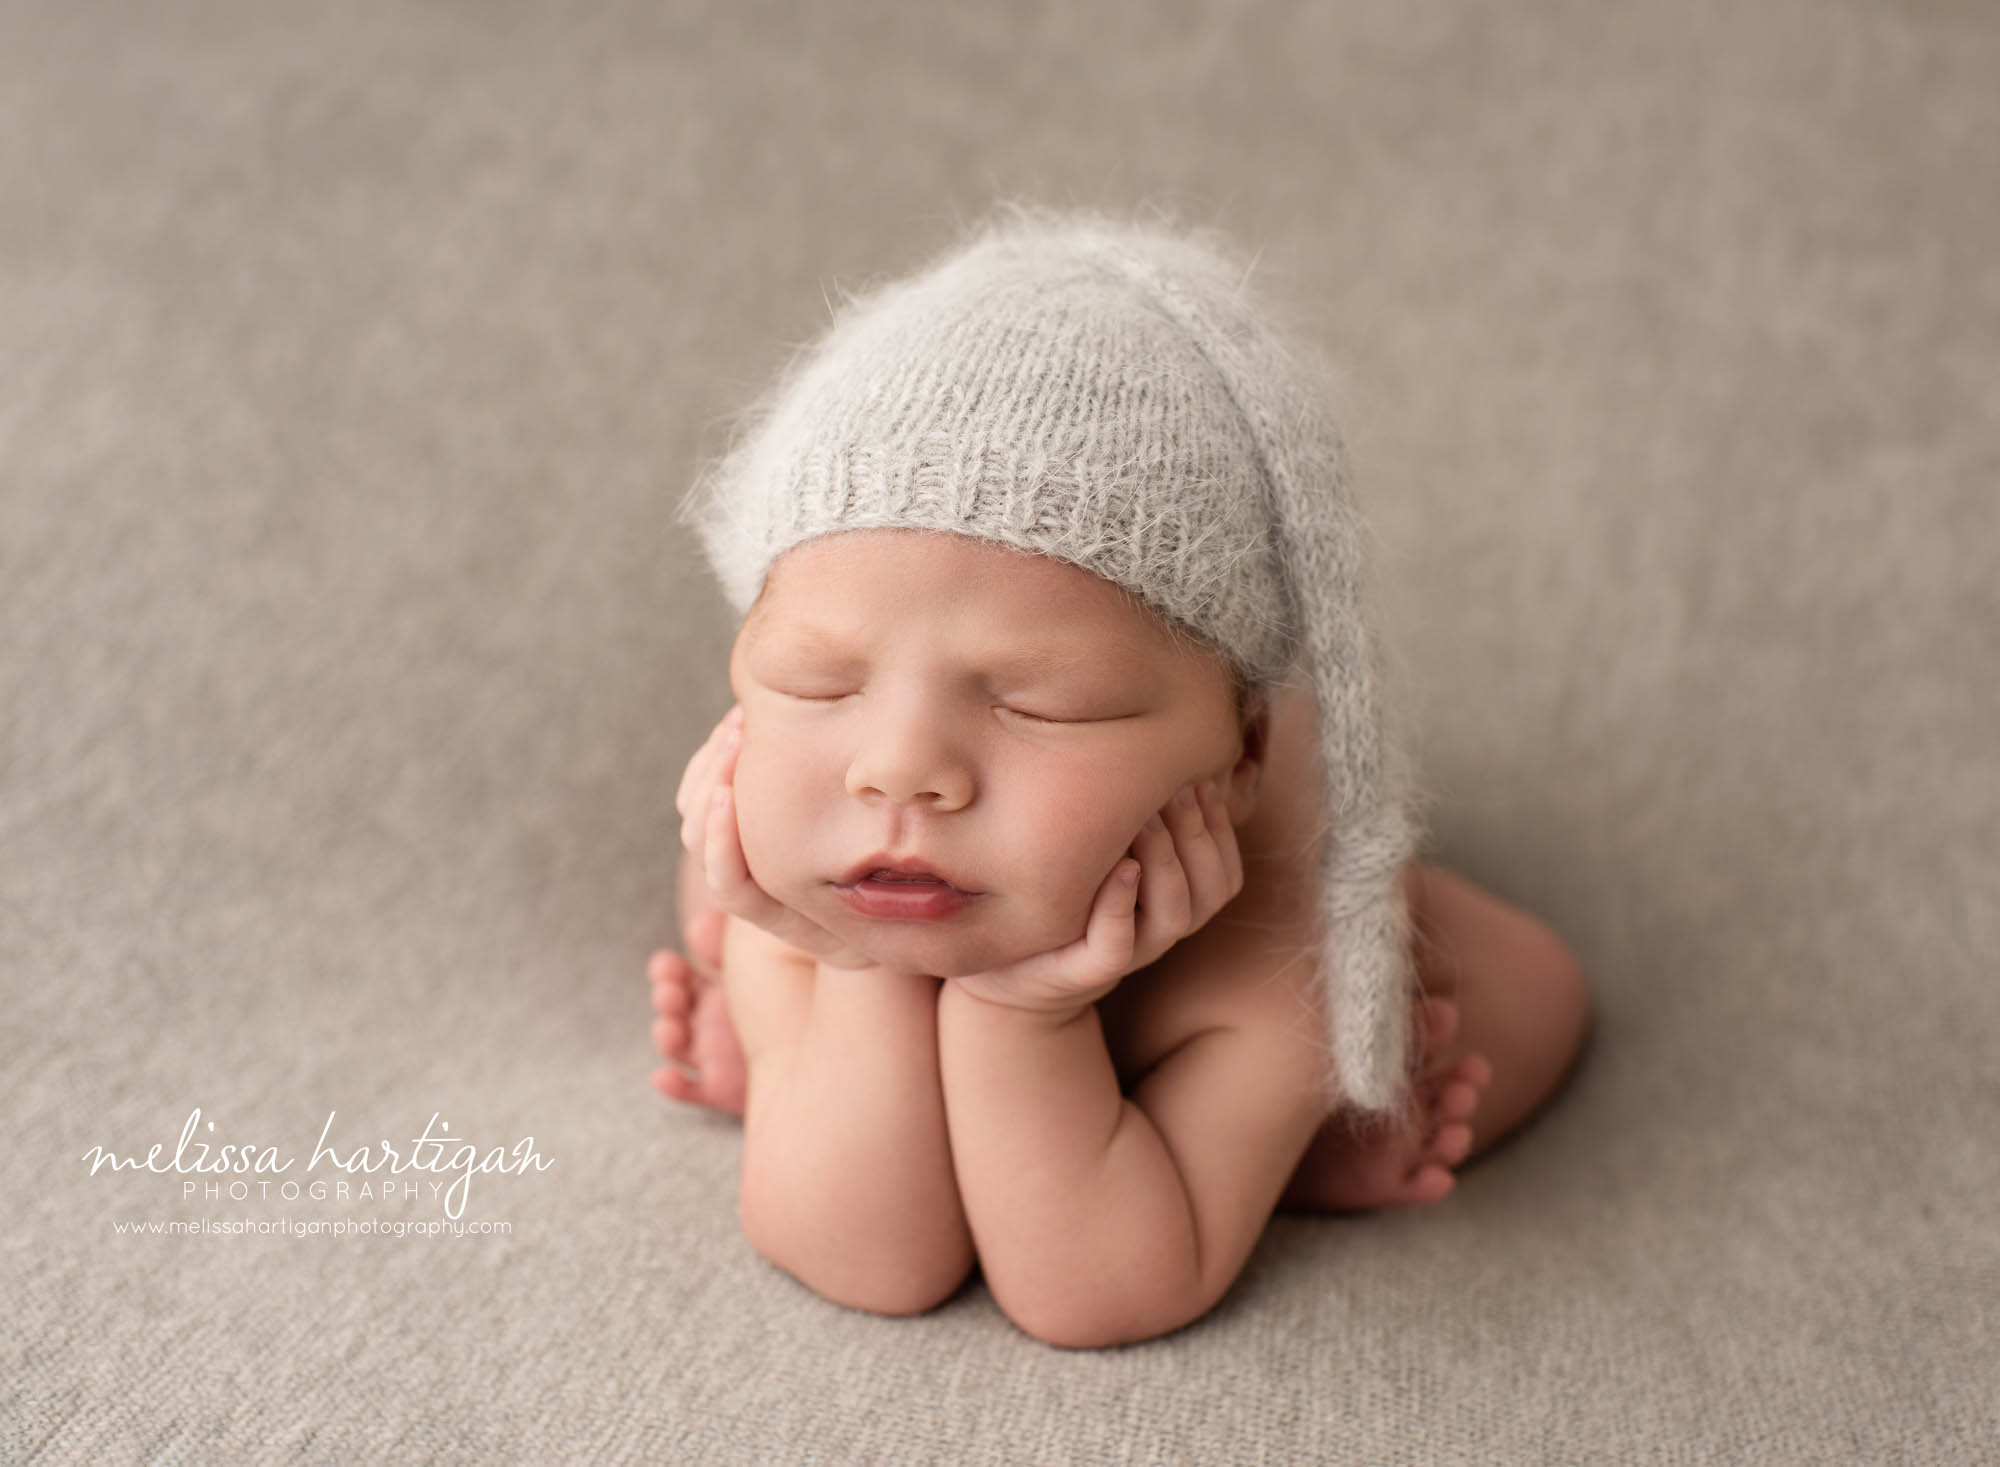 newborn baby boy posed froggy pose wearing knitted sleepy cap newborn photography newington ct